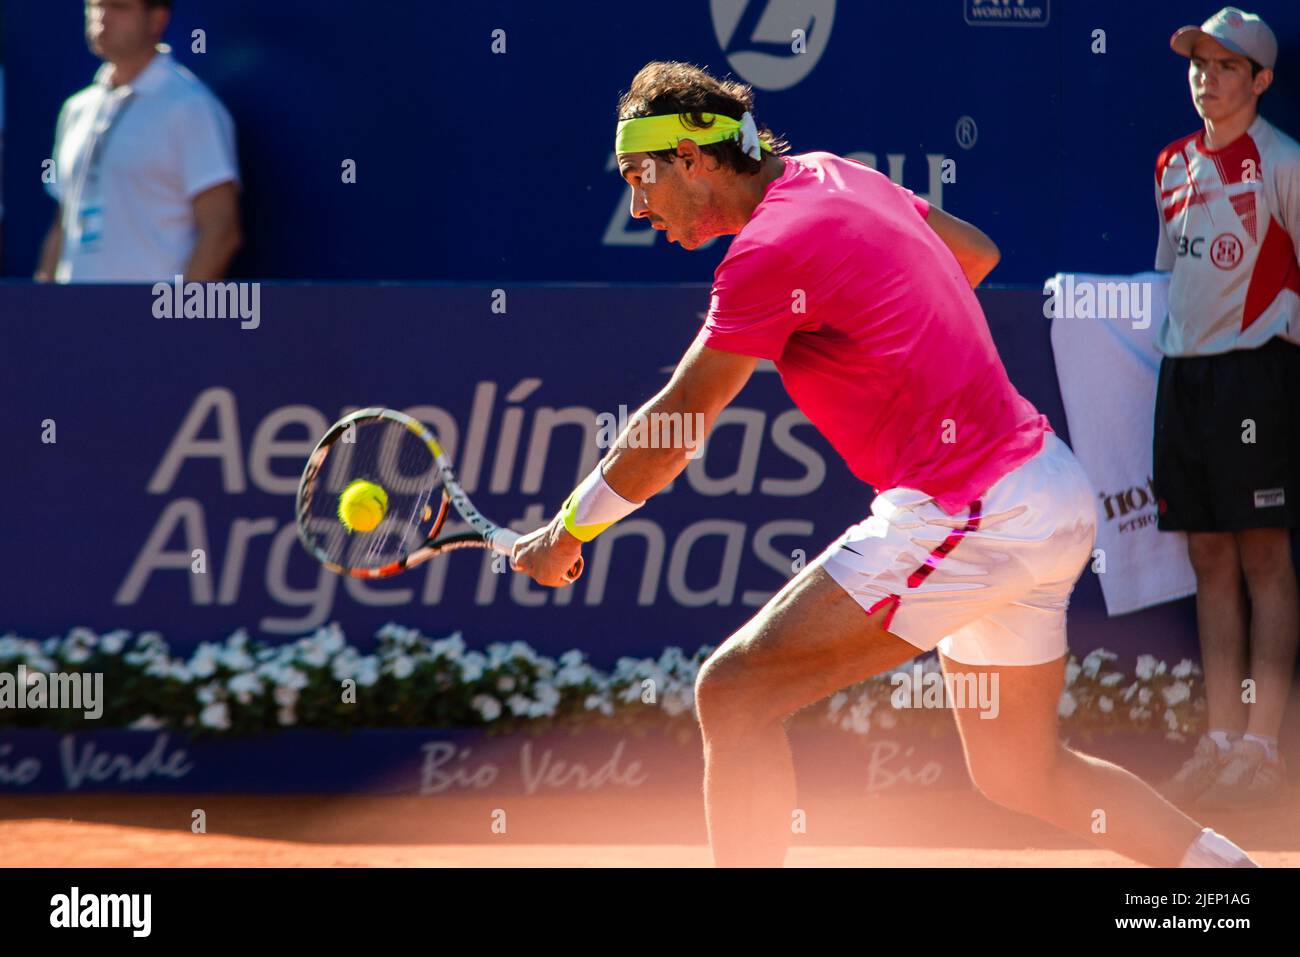 Rafa Nadal playing on clay. Stock Photo